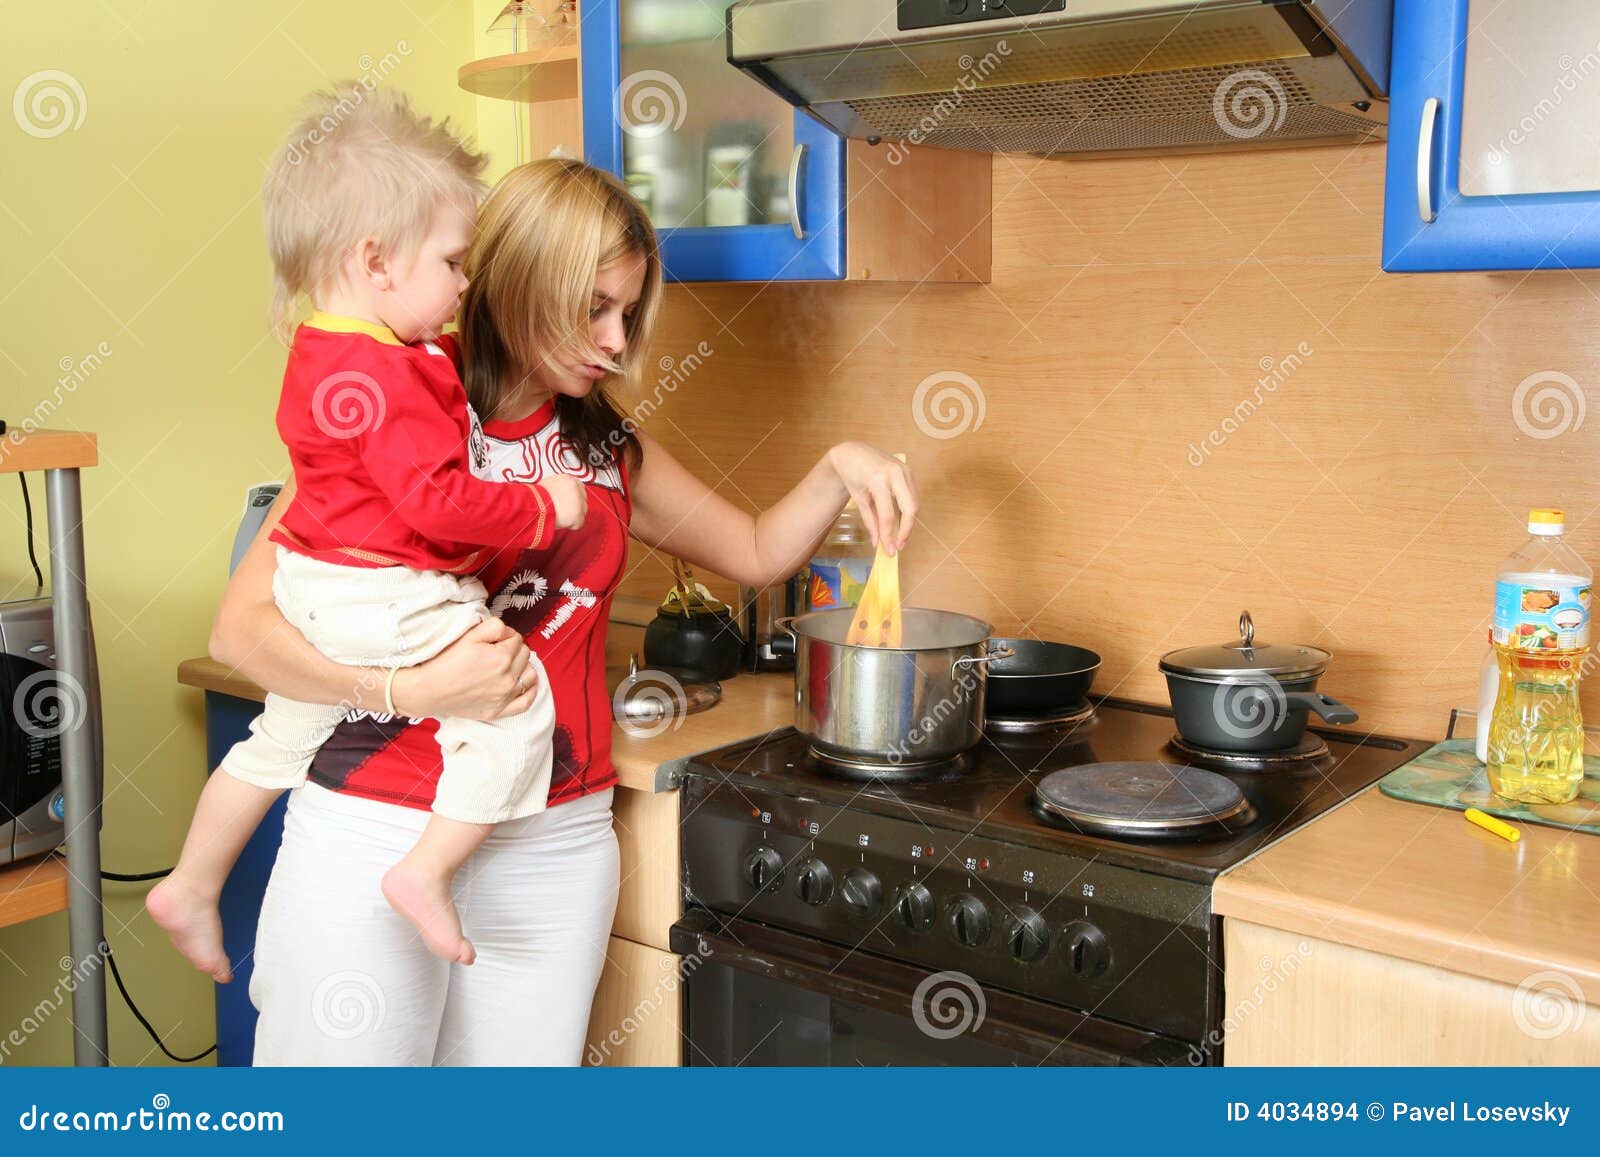 Кухня для детей. Мама с ребенком на кухне. Фотосессия мама и дети на кухне. Женщина с ребенком на кухне.